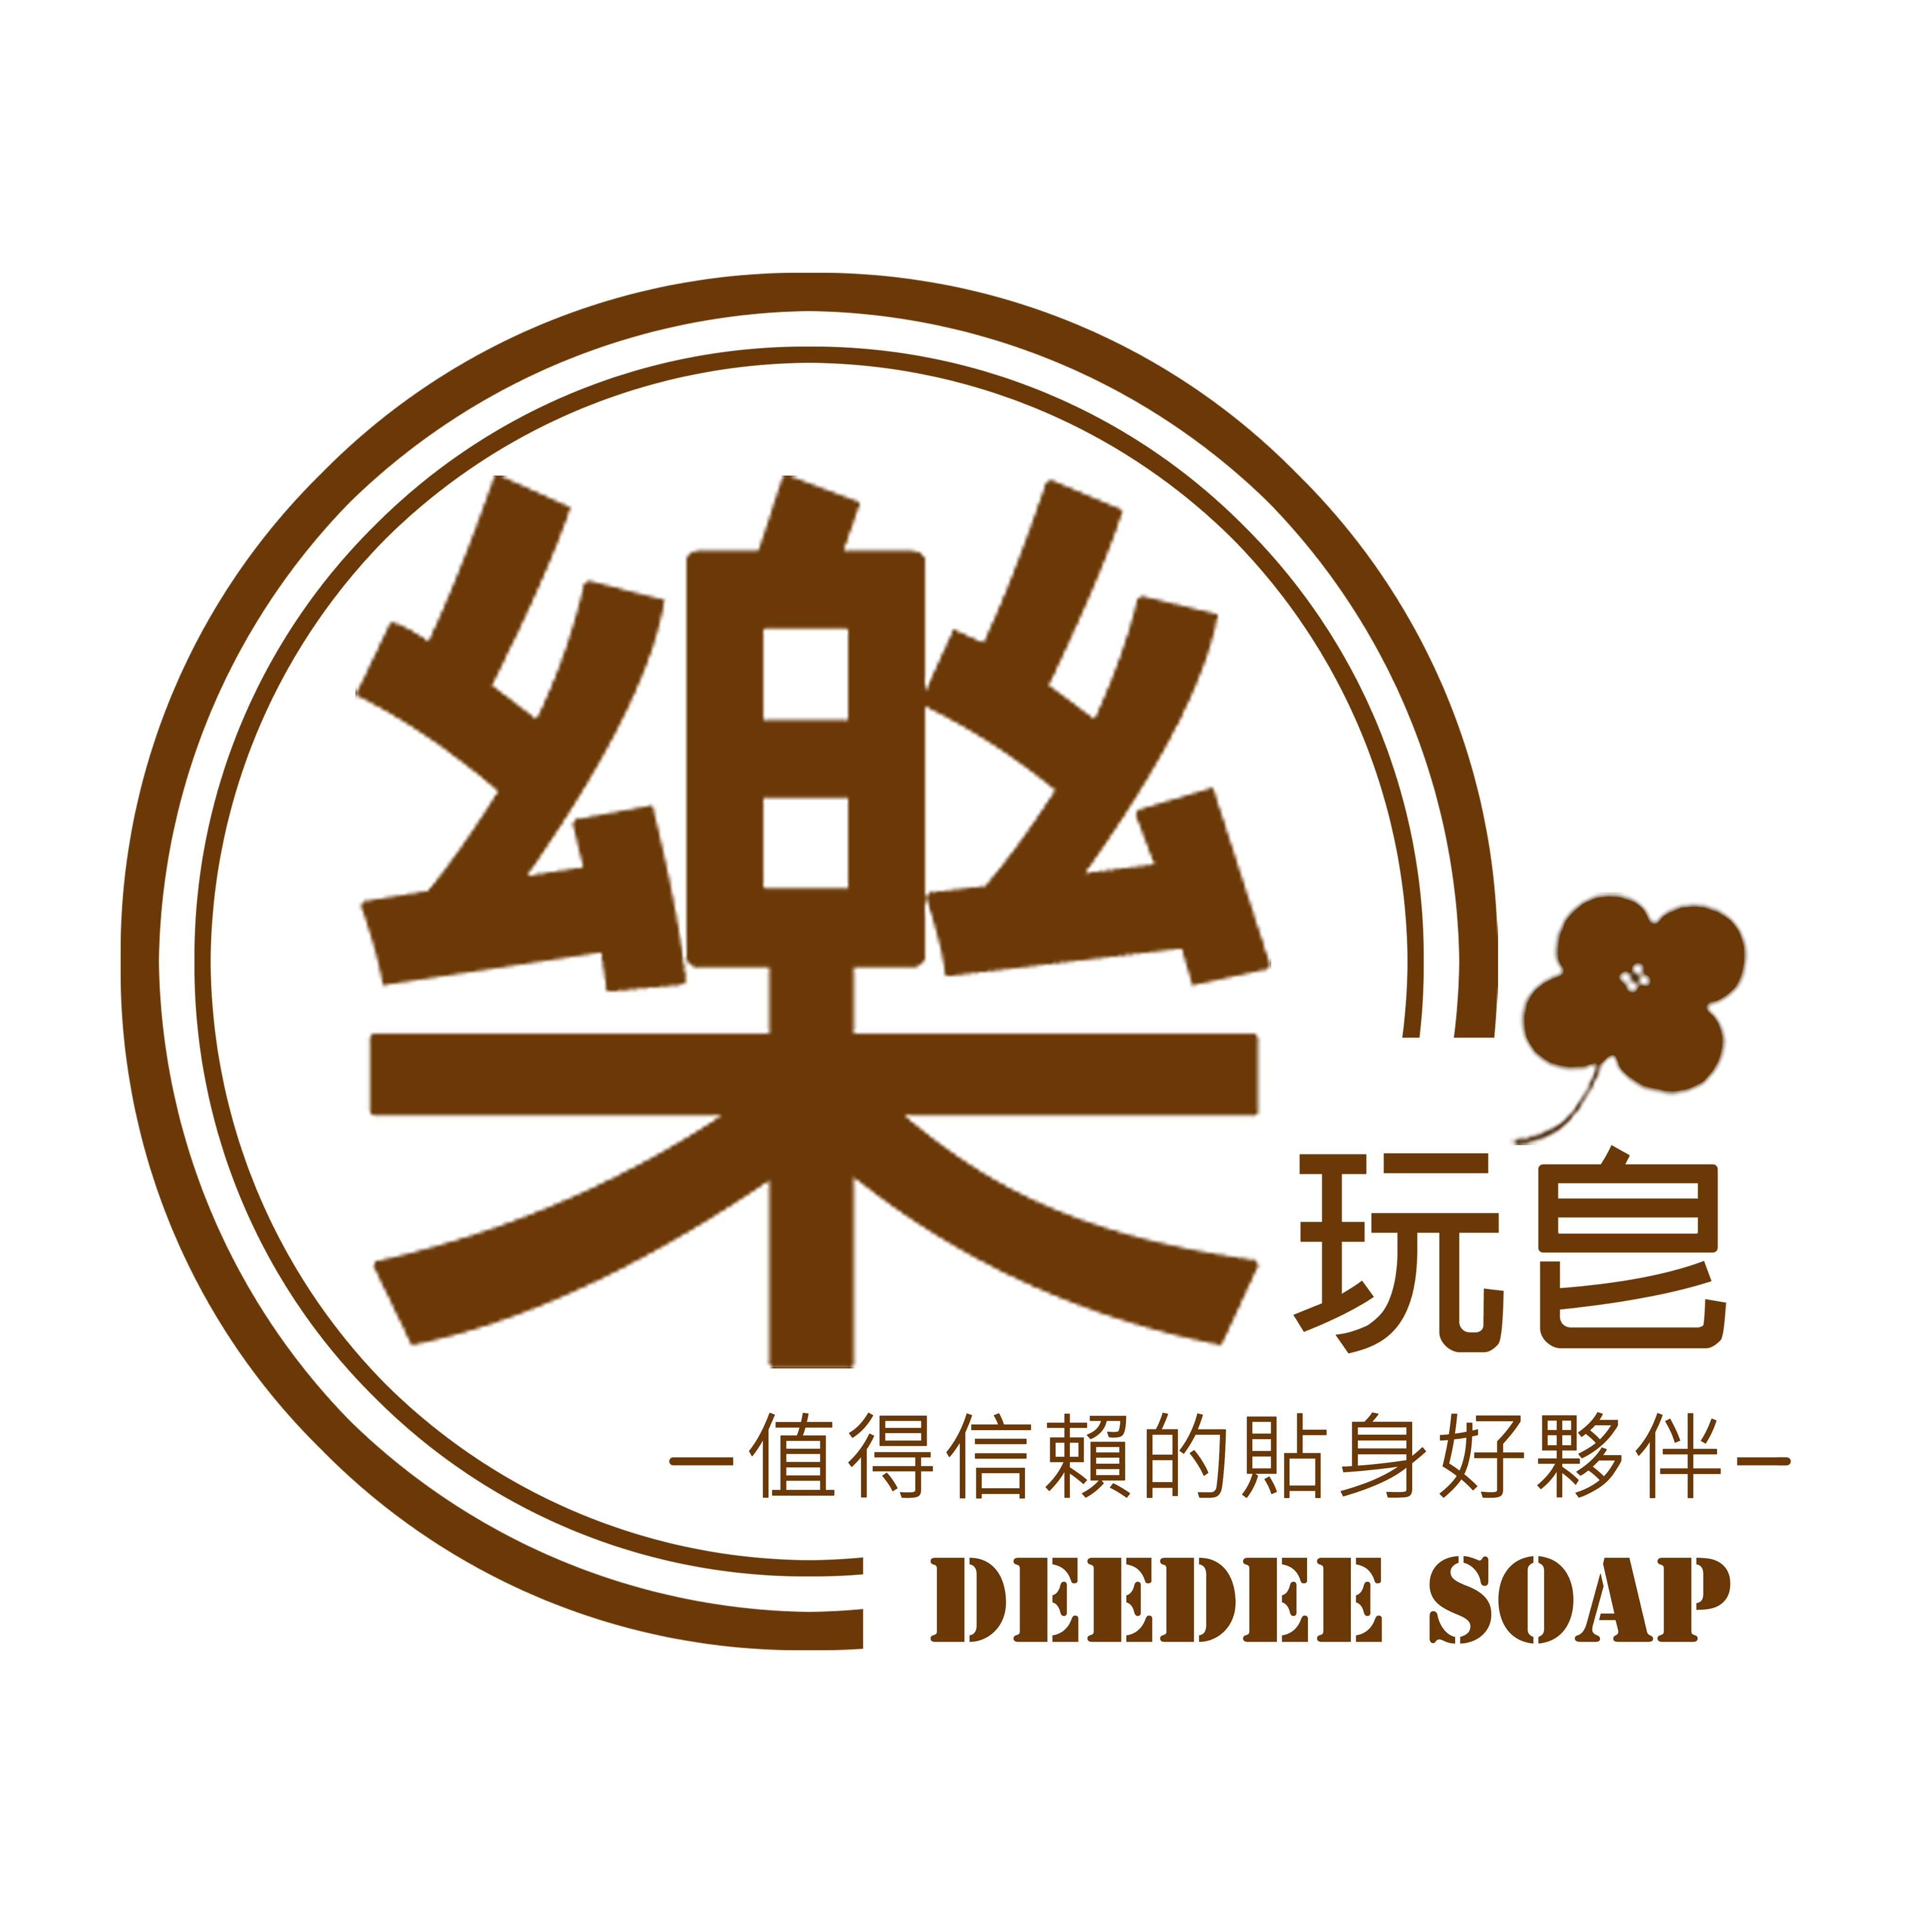 Deedee soap 樂玩皂